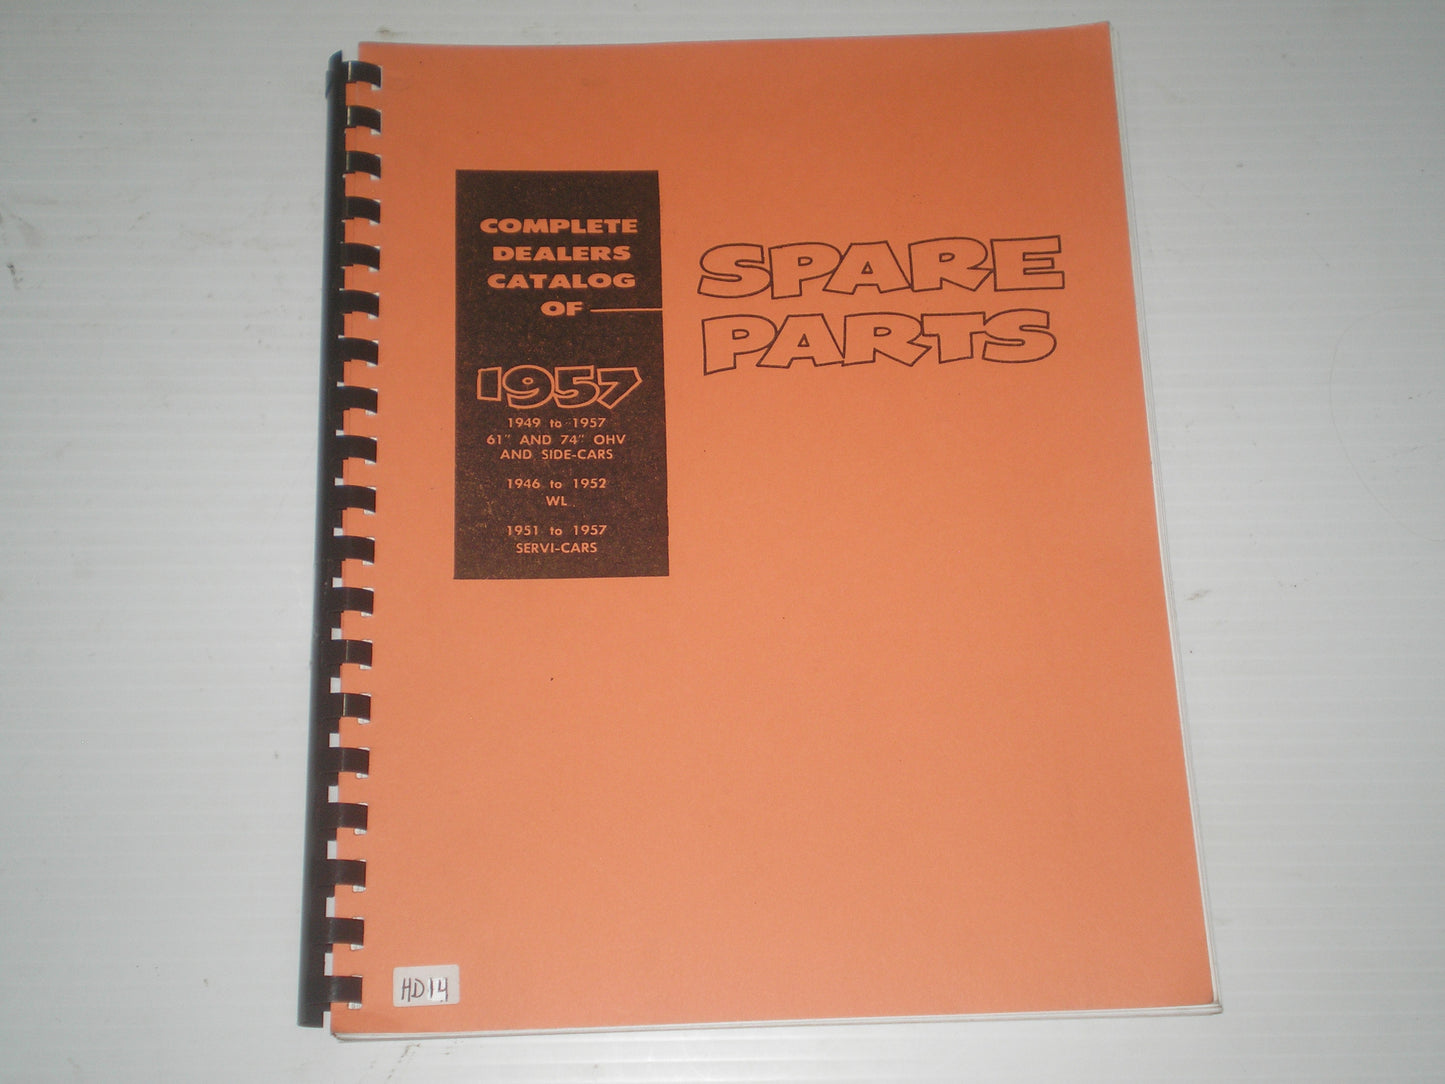 HARLEY-DAVIDSON 1946-1957  Complete Dealers Catalog of Spare Parts  #HD14